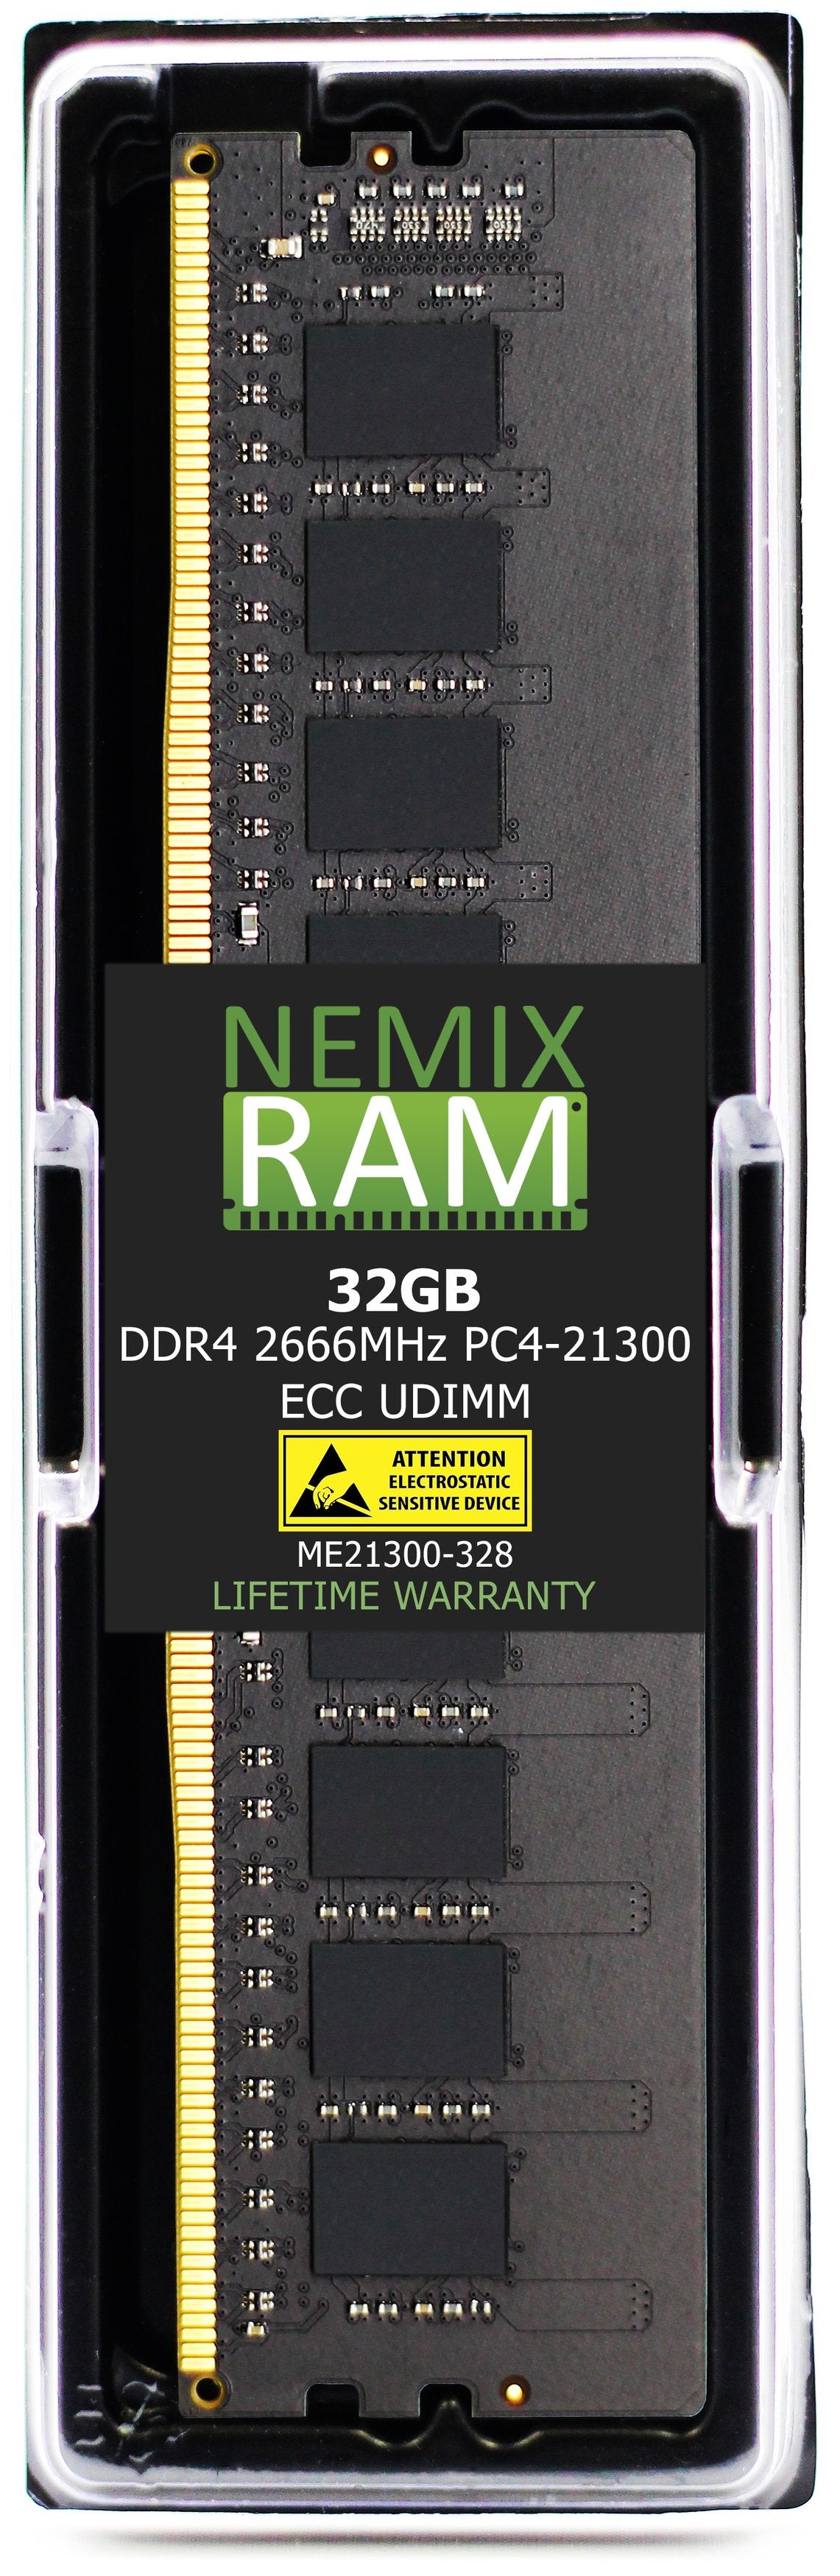 32GB DDR4 2666MHZ PC4-21300 ECC UDIMM Compatible with Supermicro MEM-DR432L-SL01-EU26